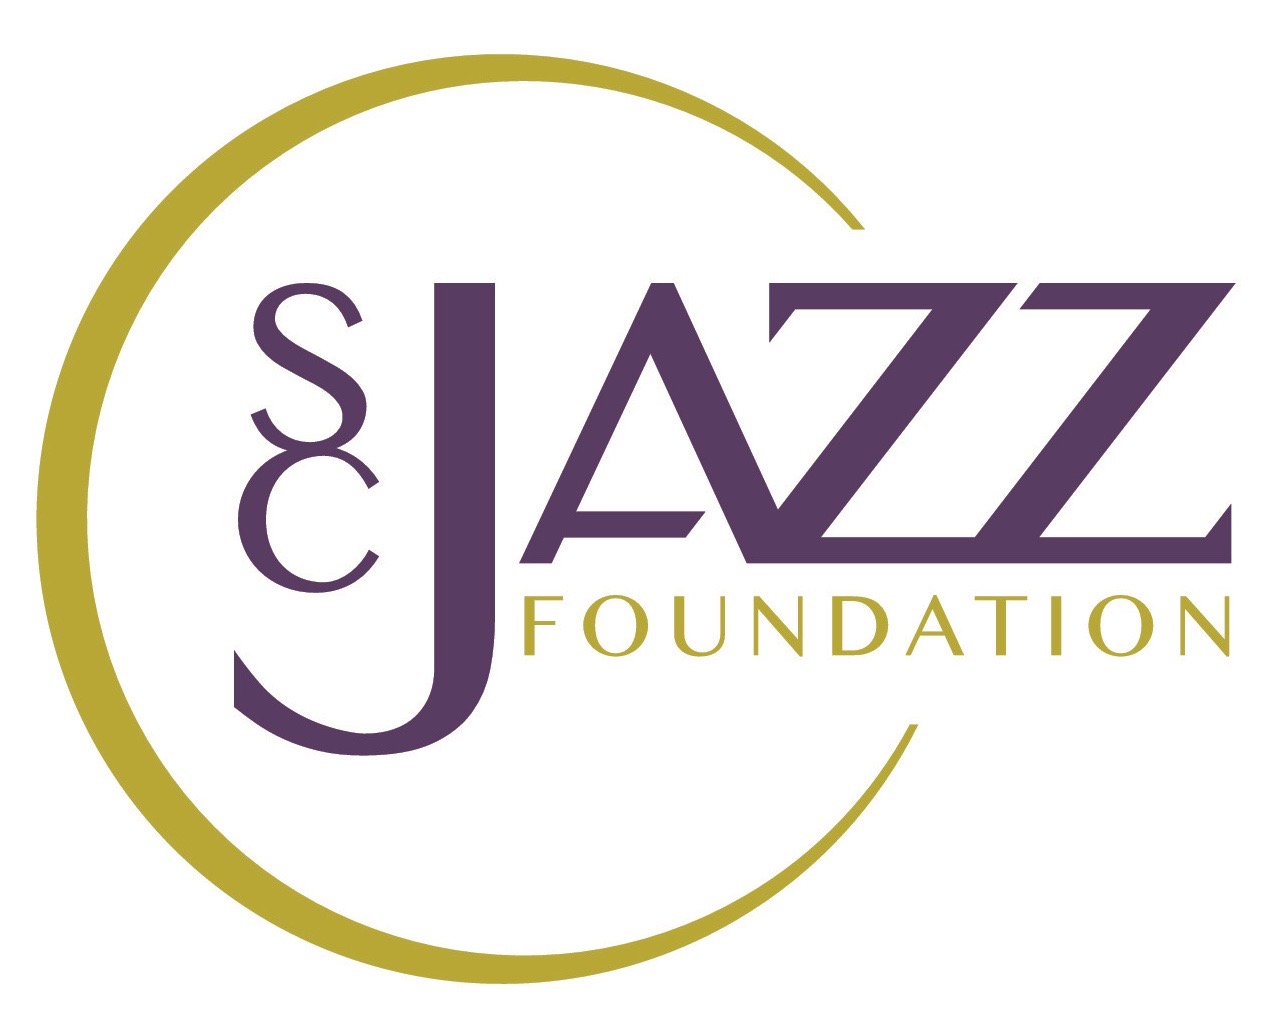 SC Jazz Foundation